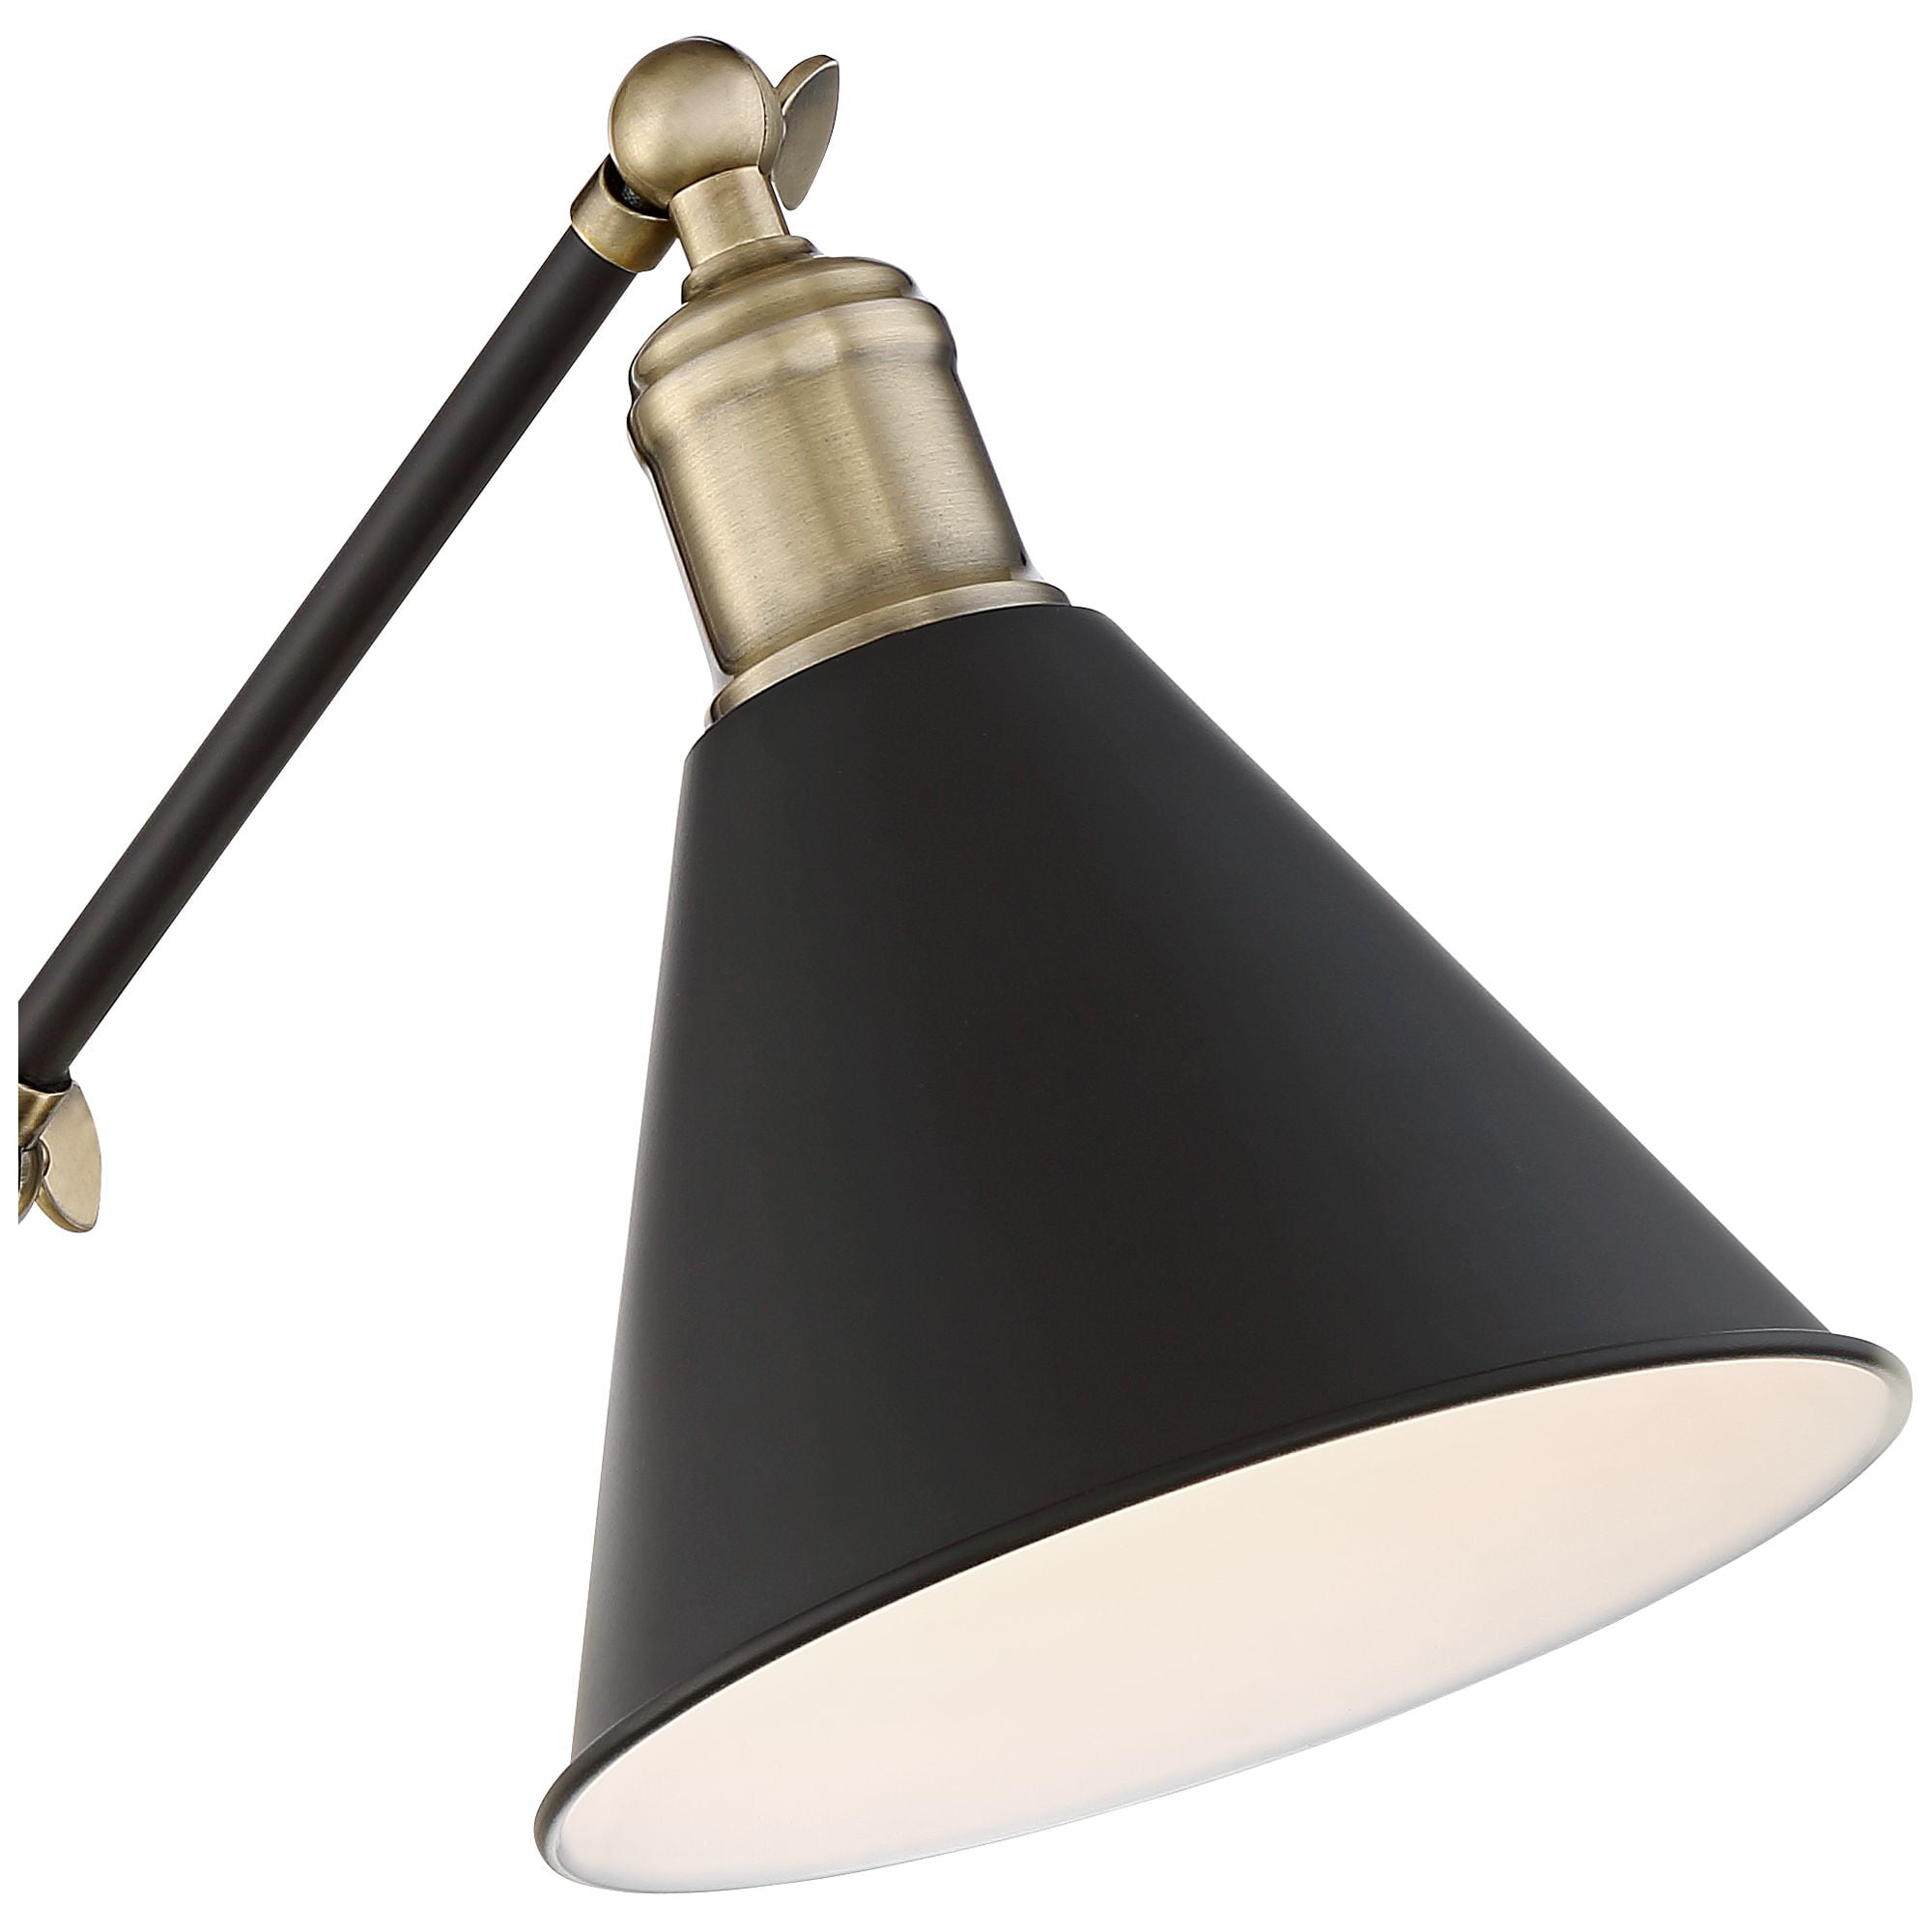 PASSICA DECOR 2 Pack Black Lamp Modern Sconce Vintage Wall Light Industrial Lighting Fixture 